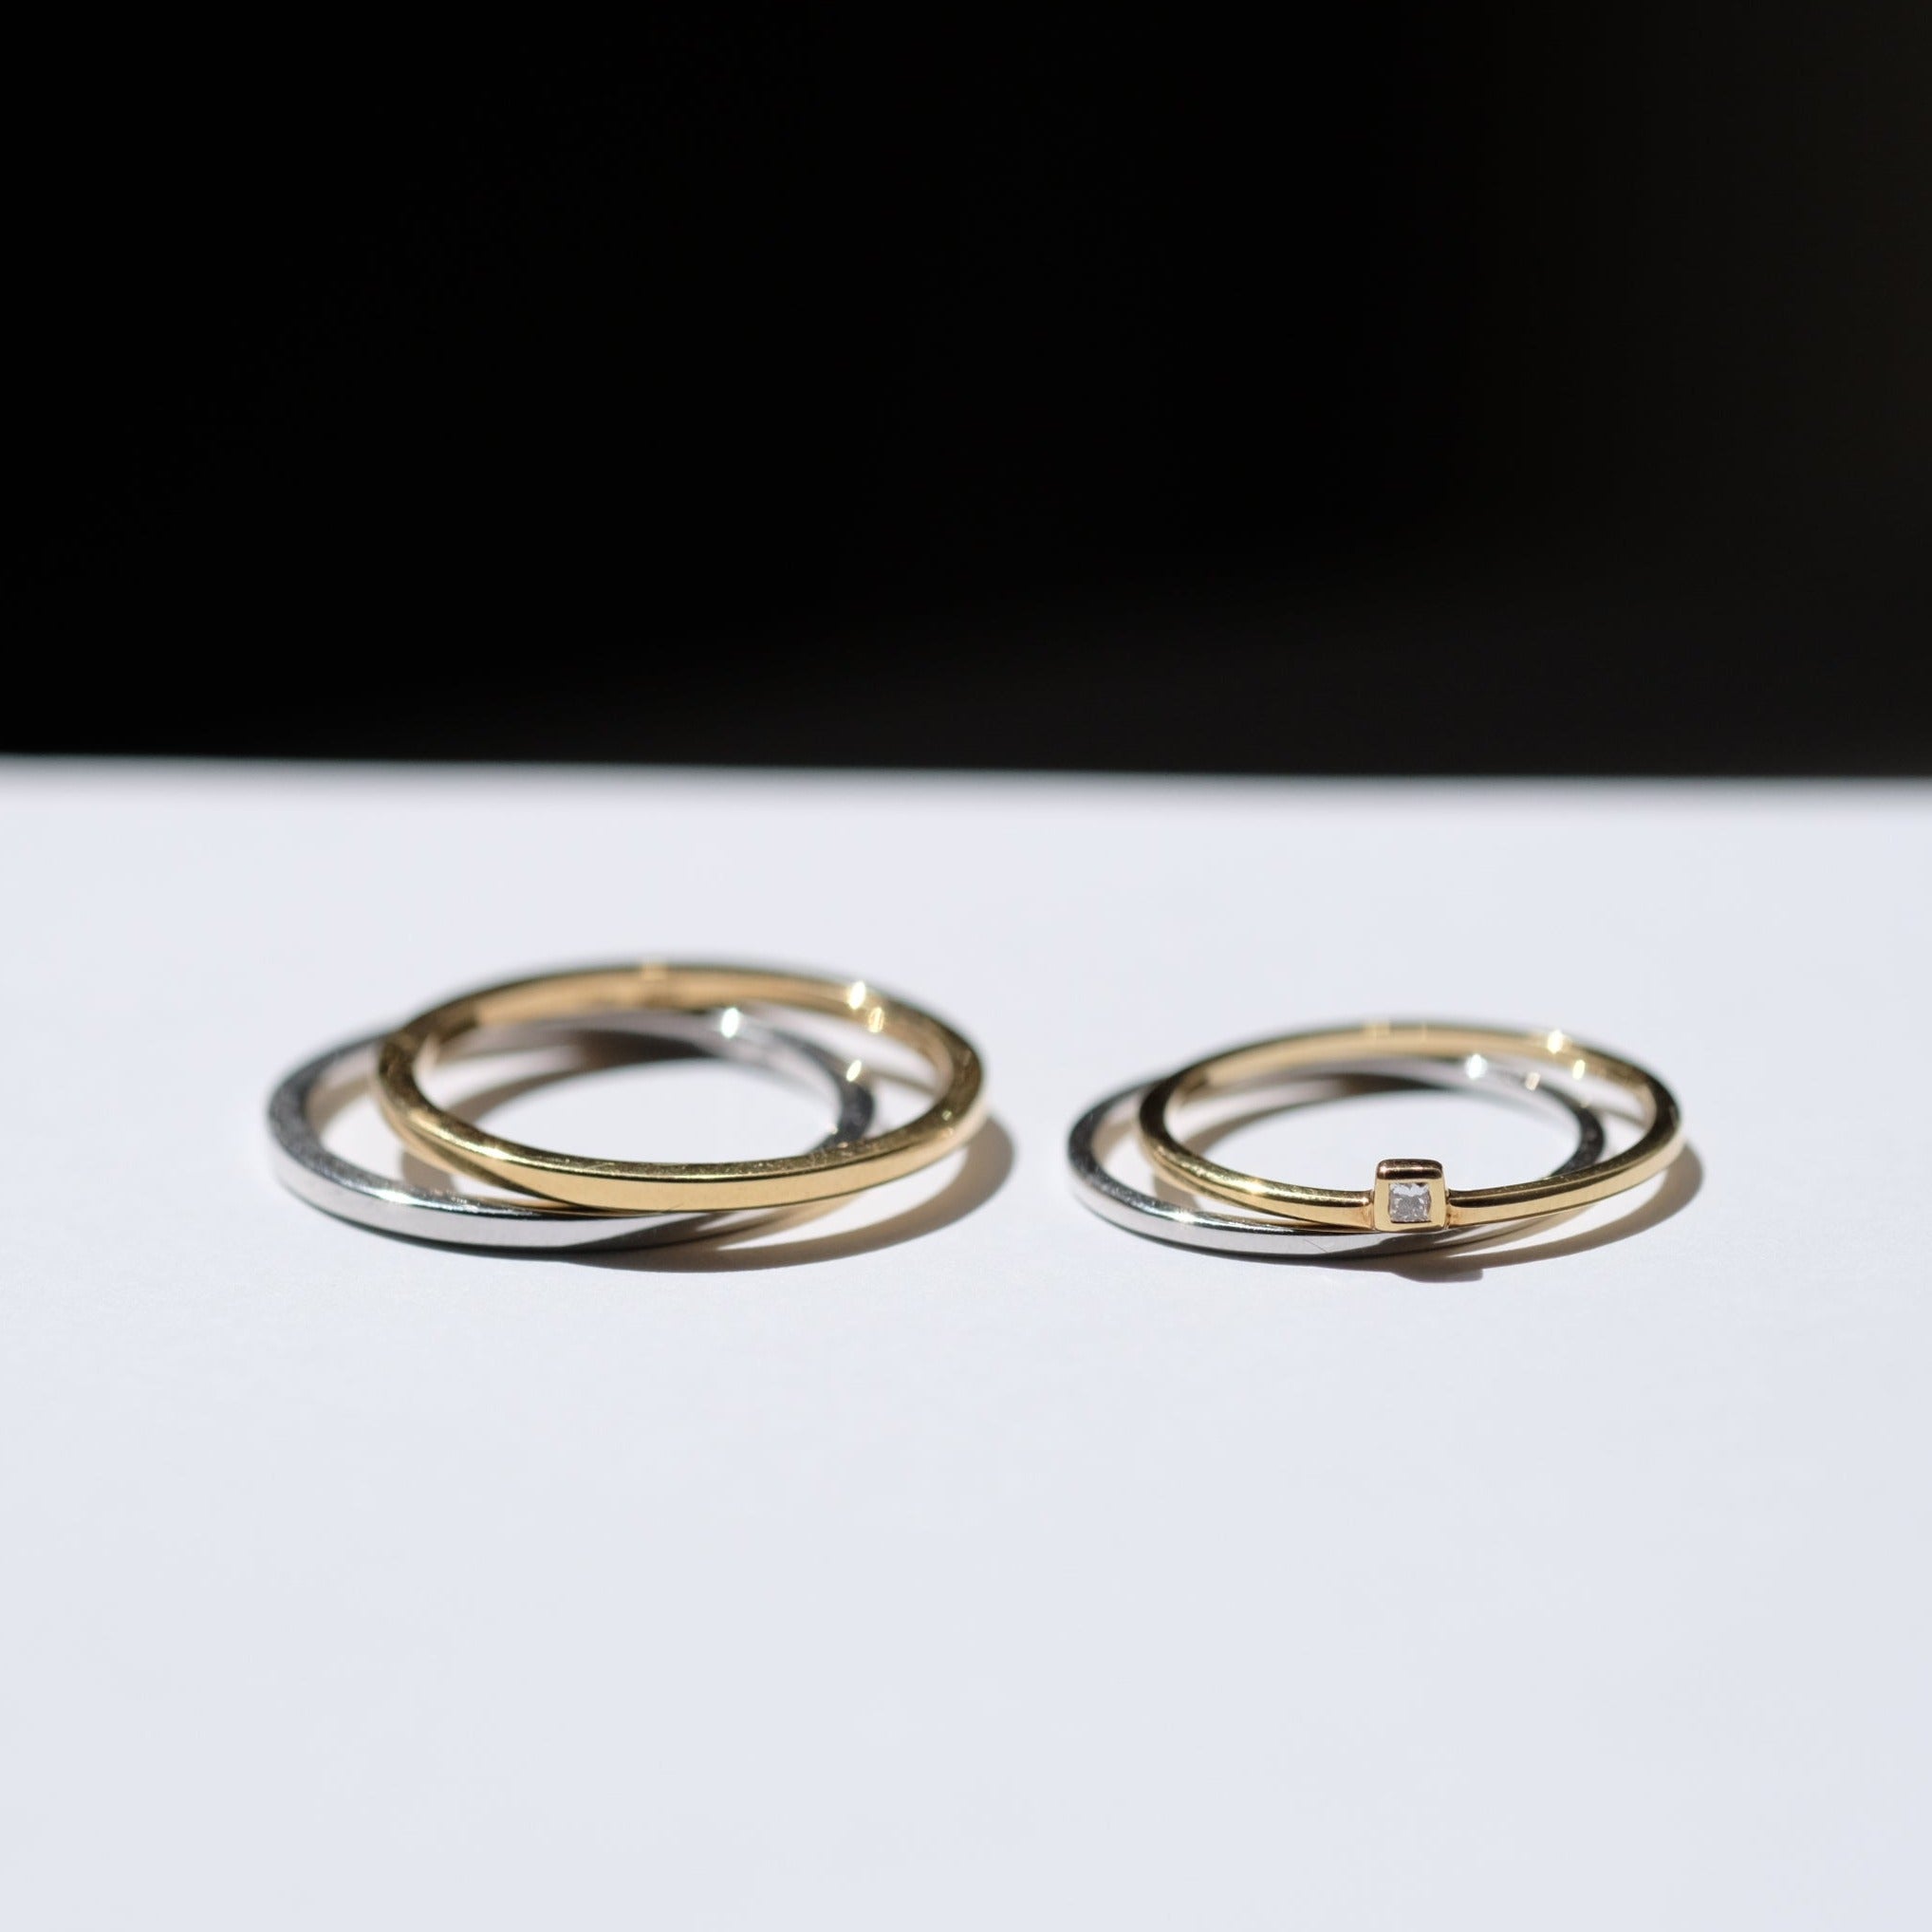 BRIDAL RING［ えんえん K18YG×Pt900/K18YG×Pt900×スクエアダイヤモンド ］結婚指輪